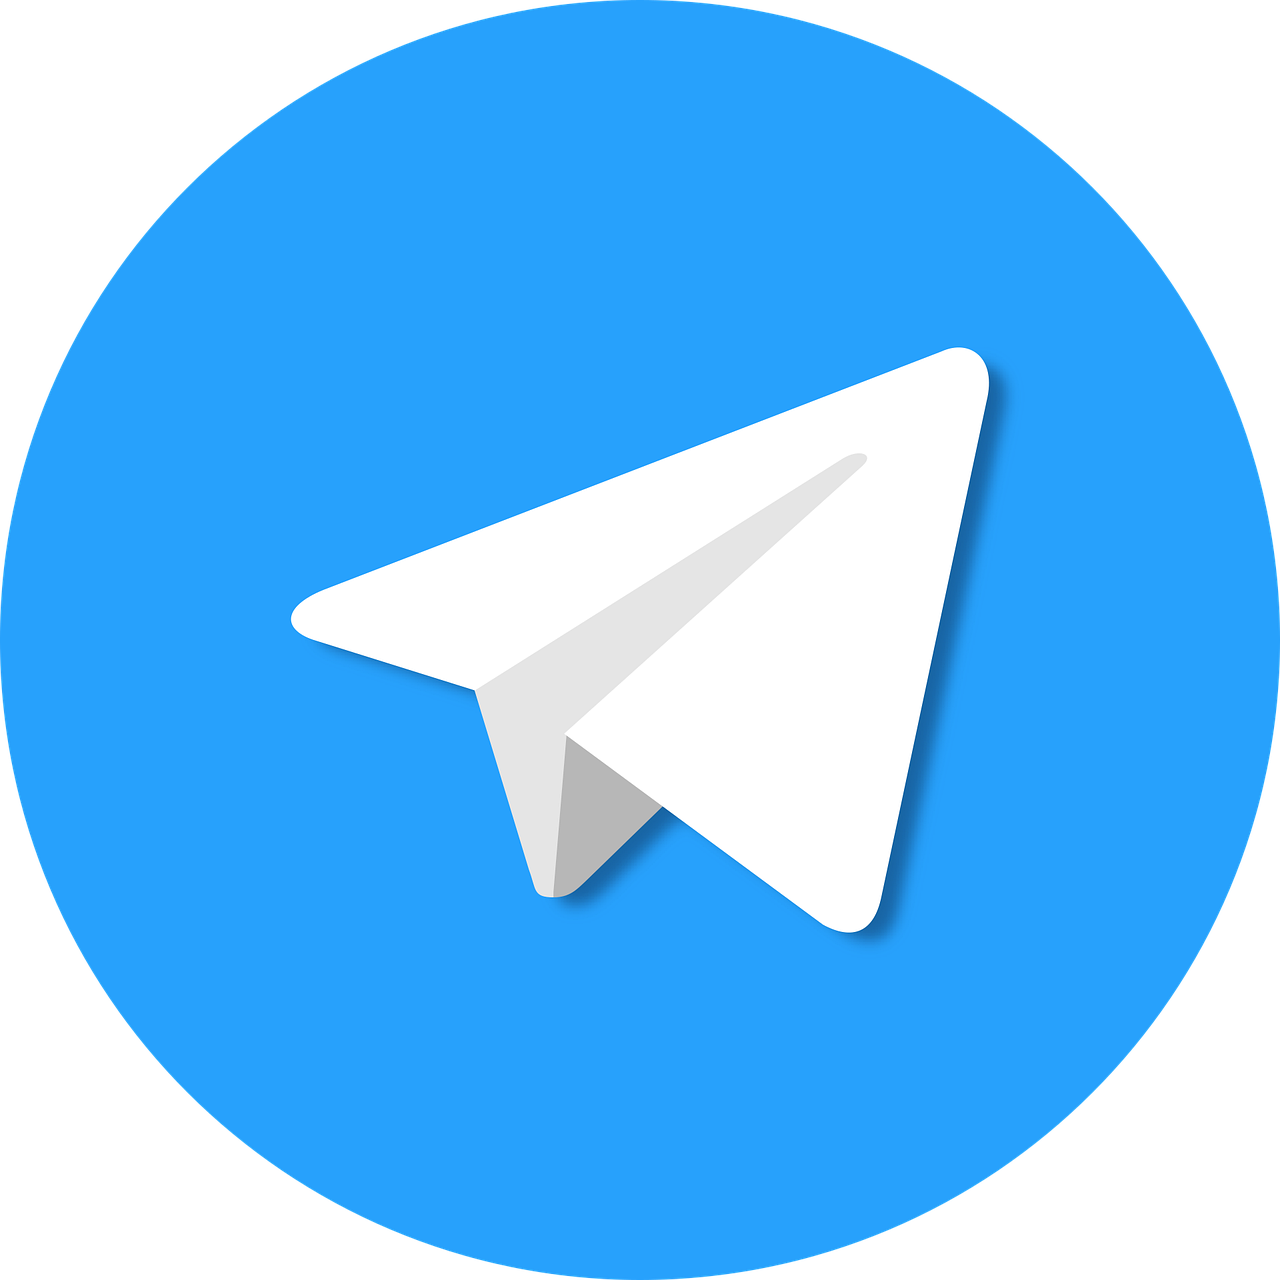 telegram login with gmail